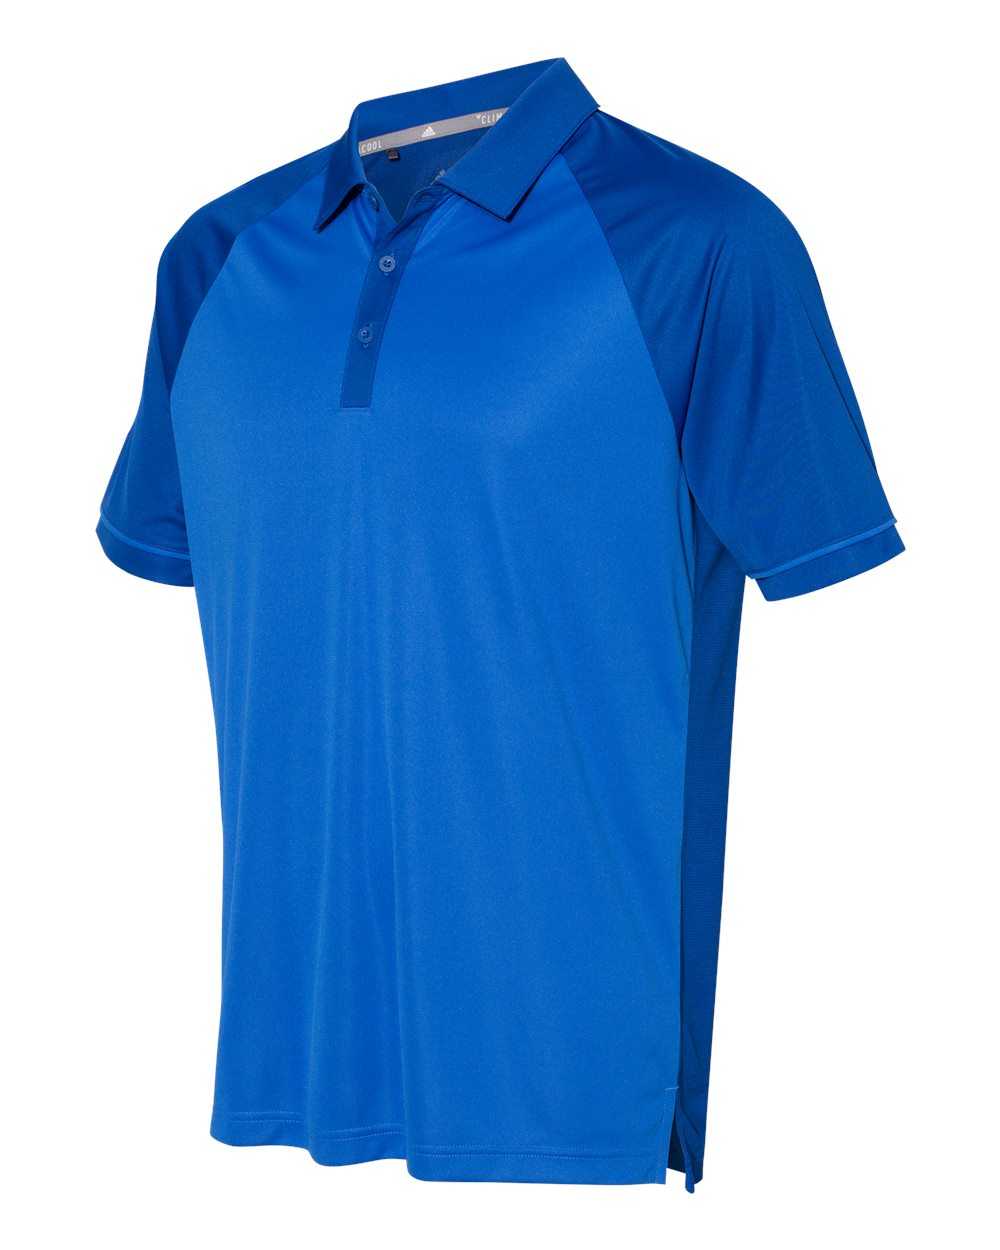 Adidas A207 Jacquard Raglan Sport Shirt - Collegiate Royal Blue - HIT a Double